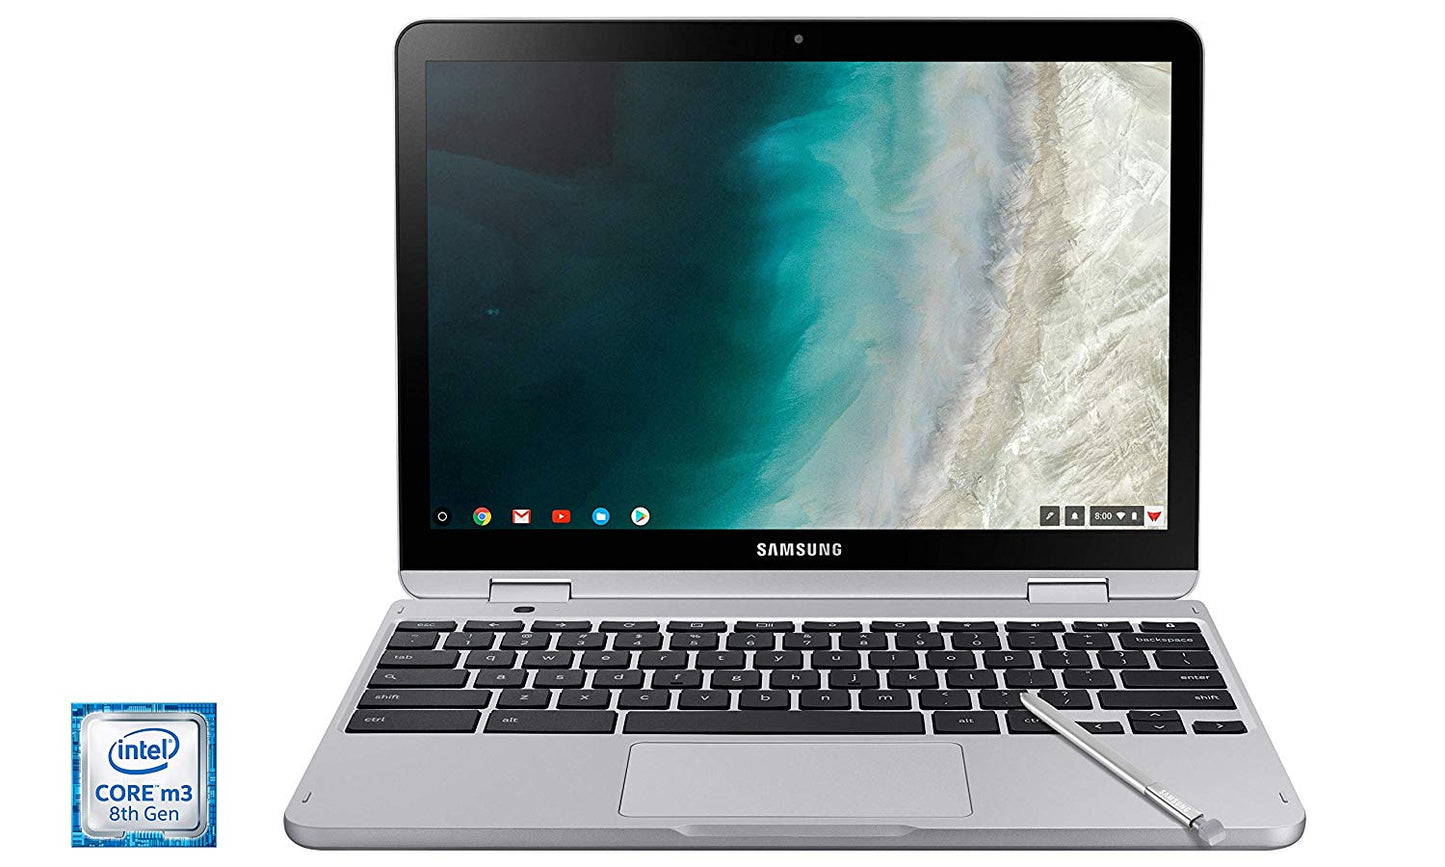 Samsung Chromebook Plus V2, 2-in-1, Core m3, 4GB RAM, 64GB 12.2 16:10 Aspect - Light Titan